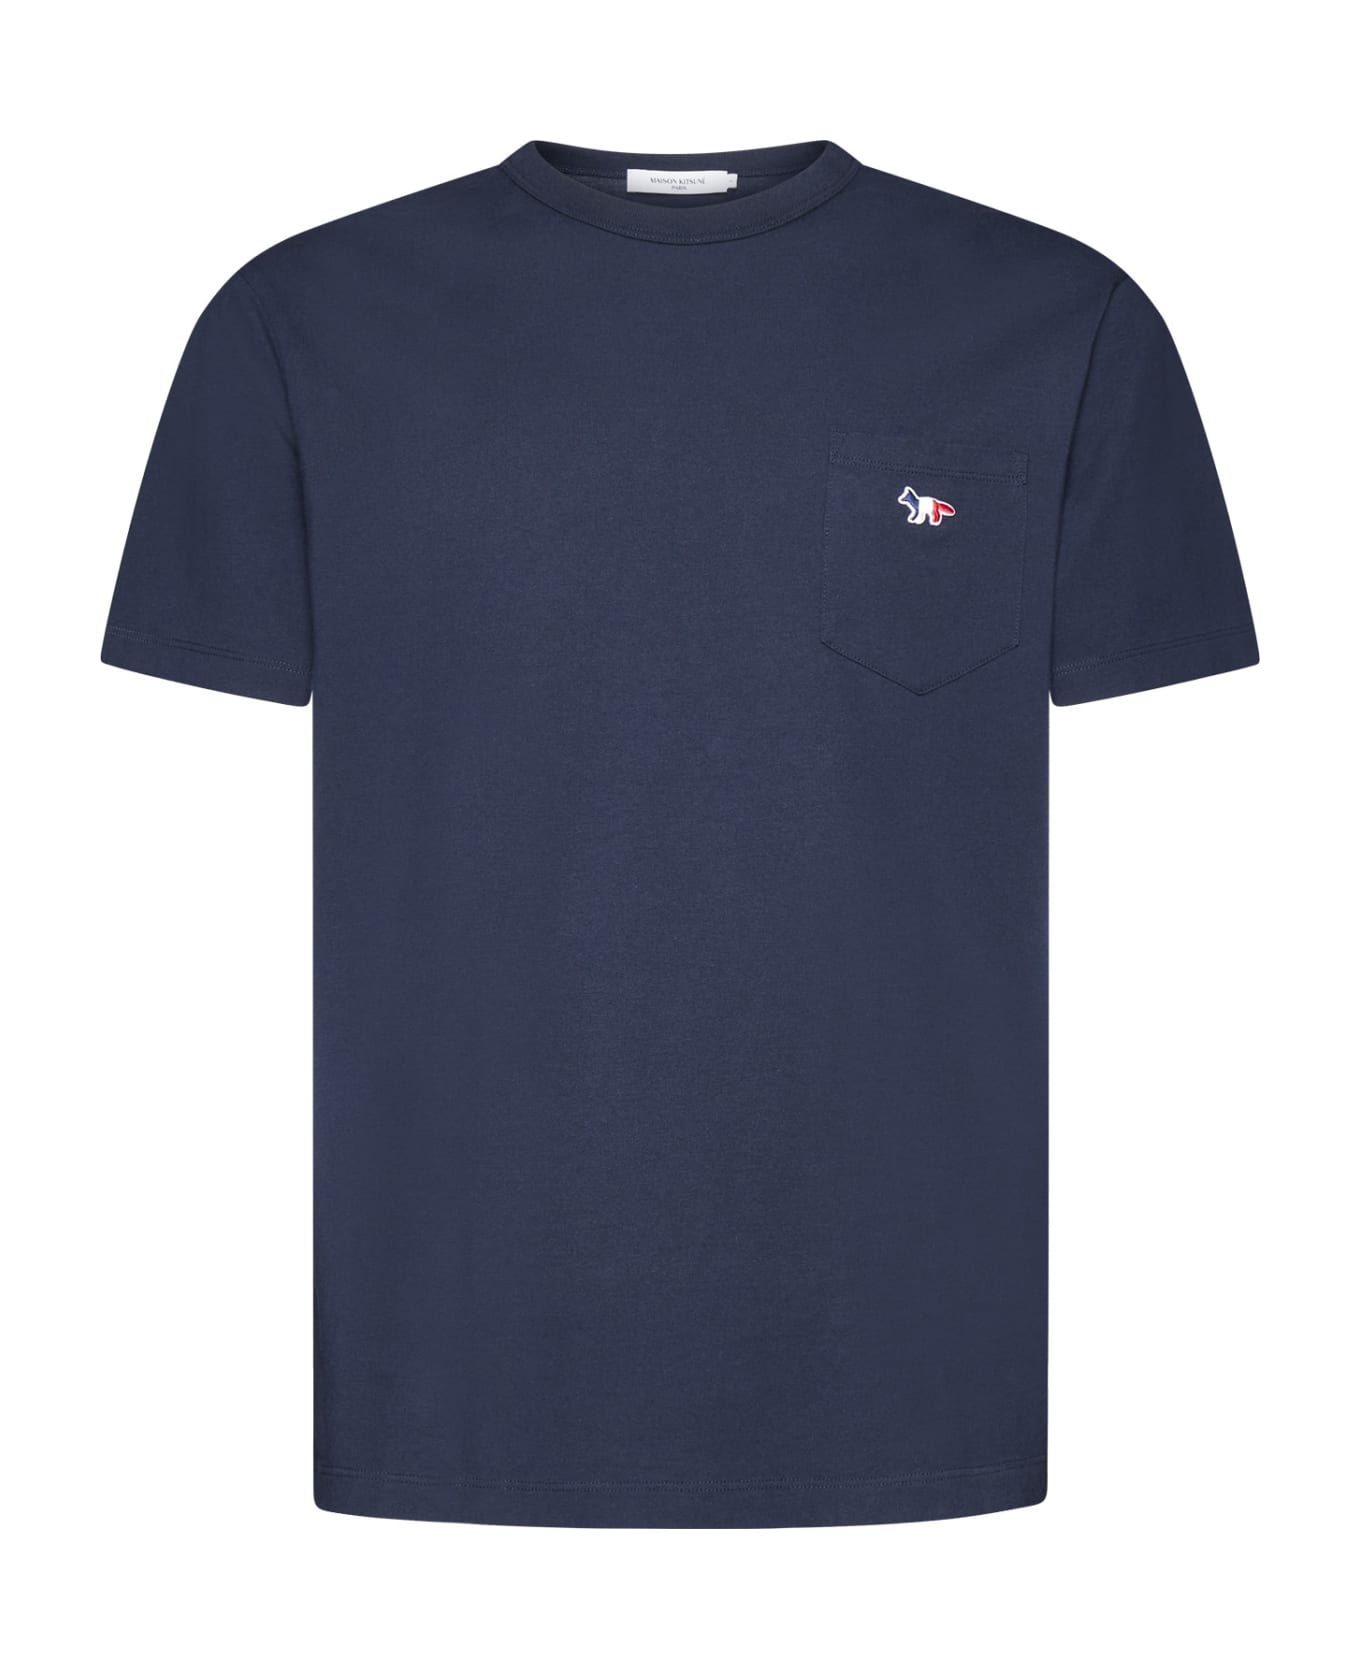 Maison Kitsuné T-Shirt - Navy